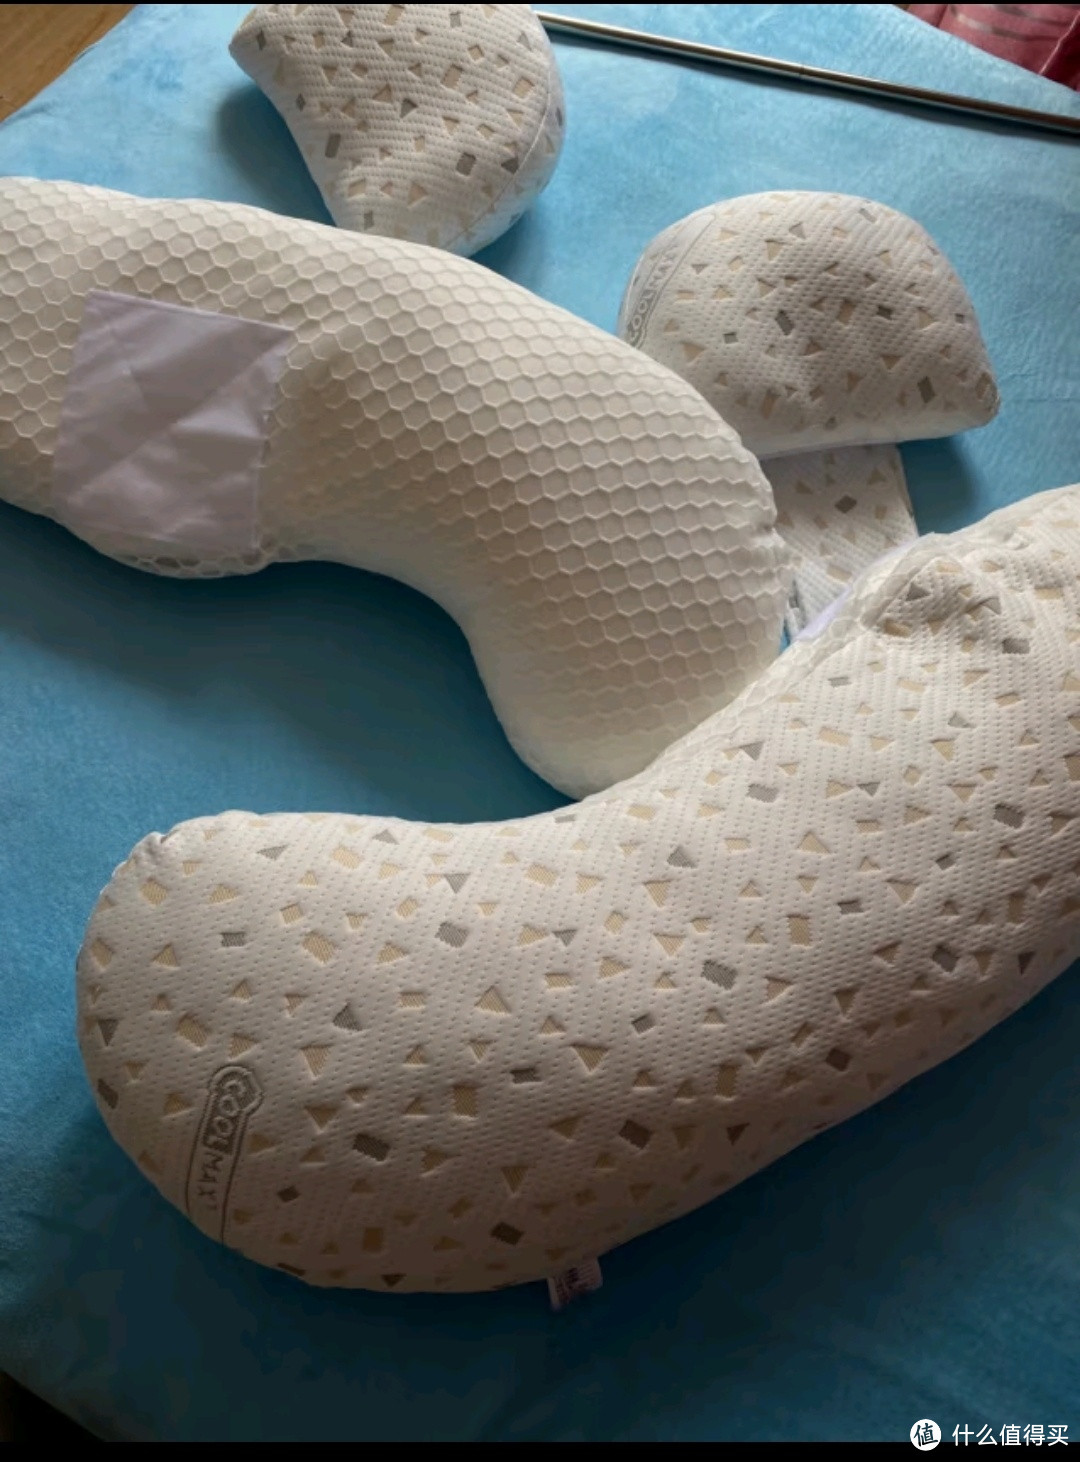 COTOONS孕妇枕头护腰侧卧睡抱枕是一款专为孕妇设计的睡眠用品